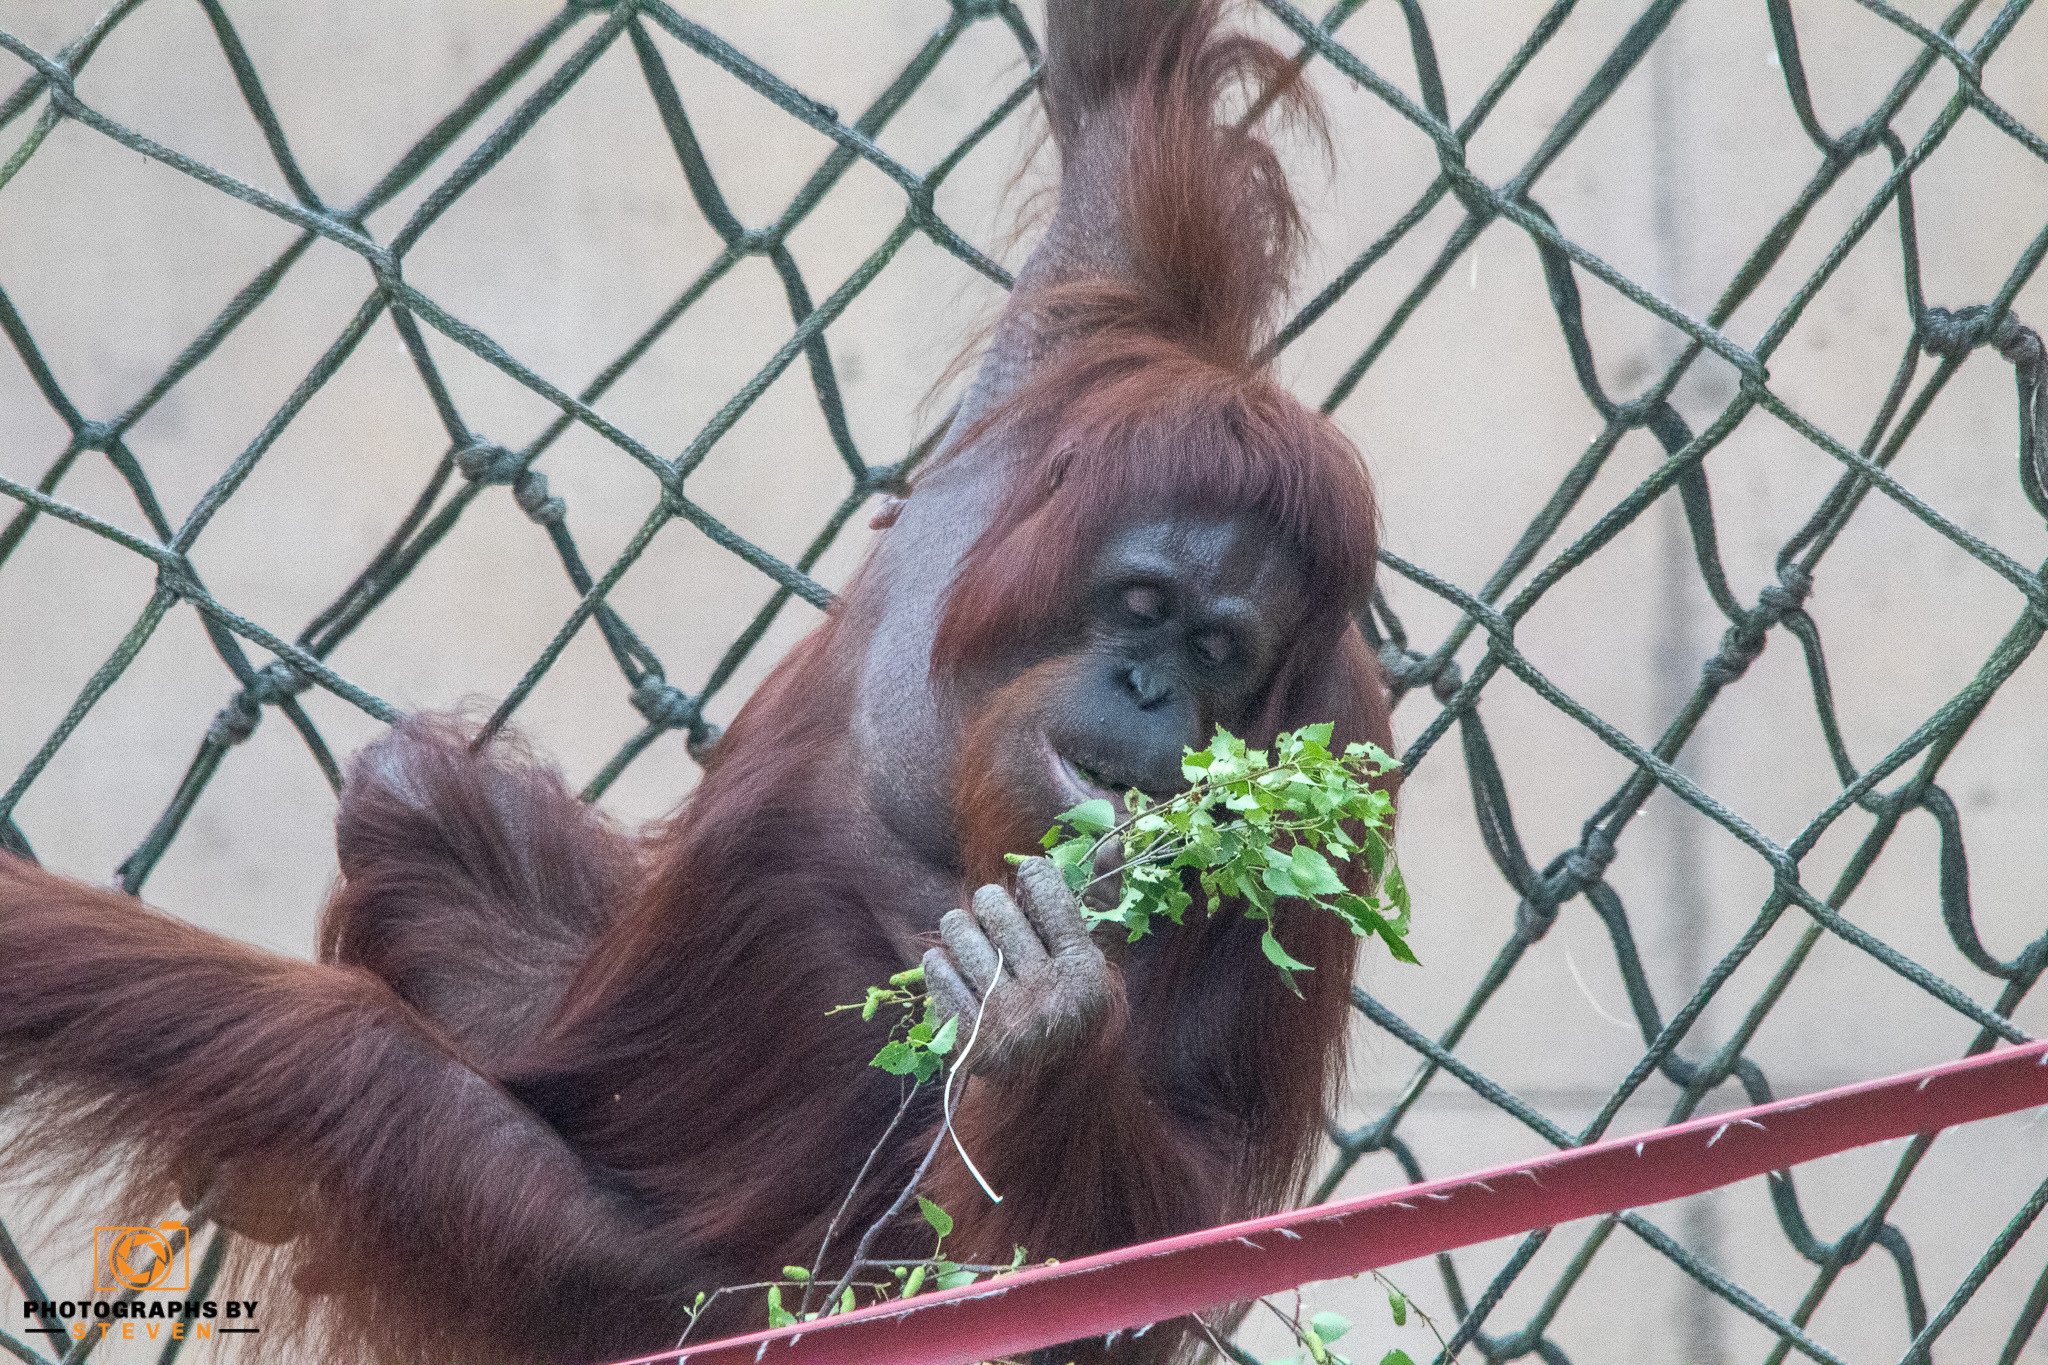 Orangutan eating a tree